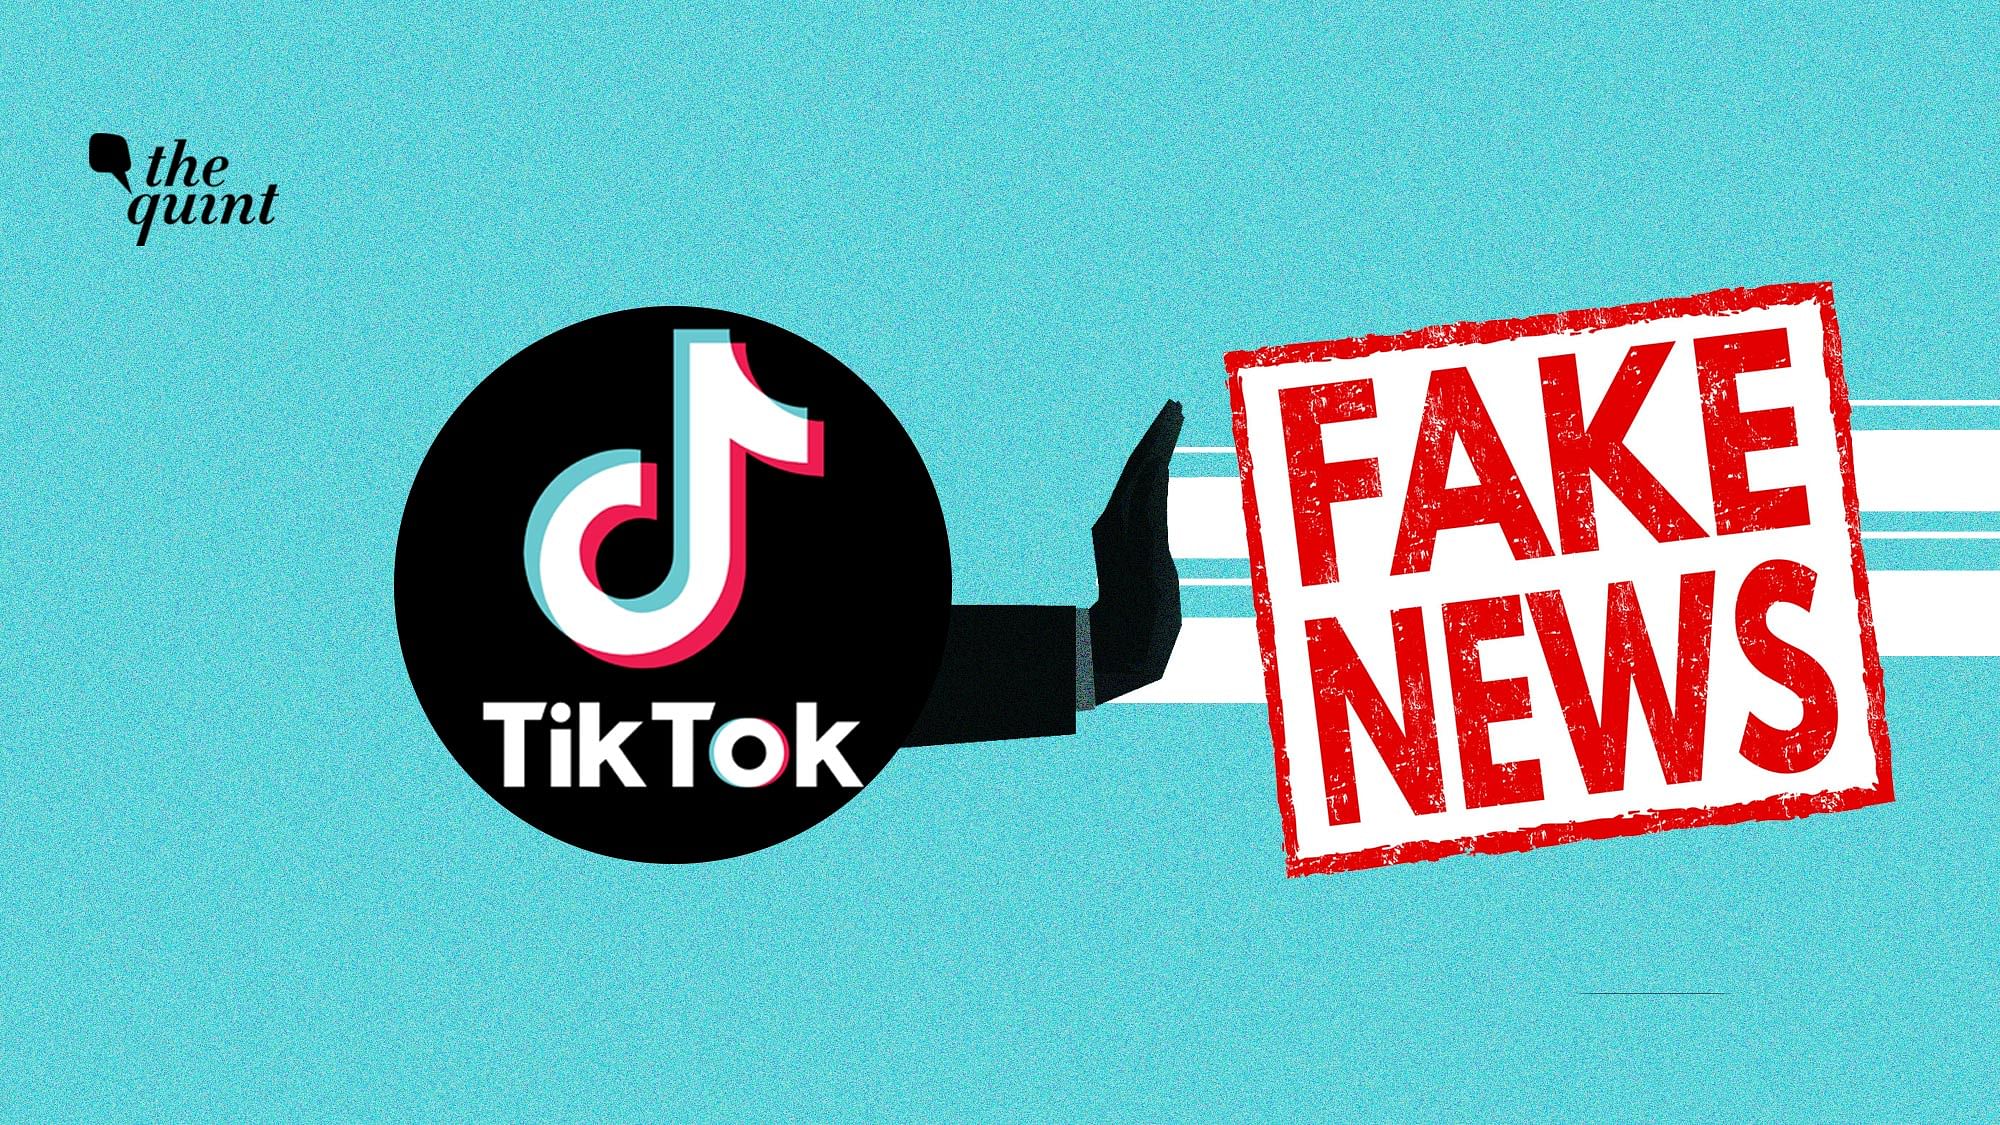 TikTok announced new features to contain fake news.